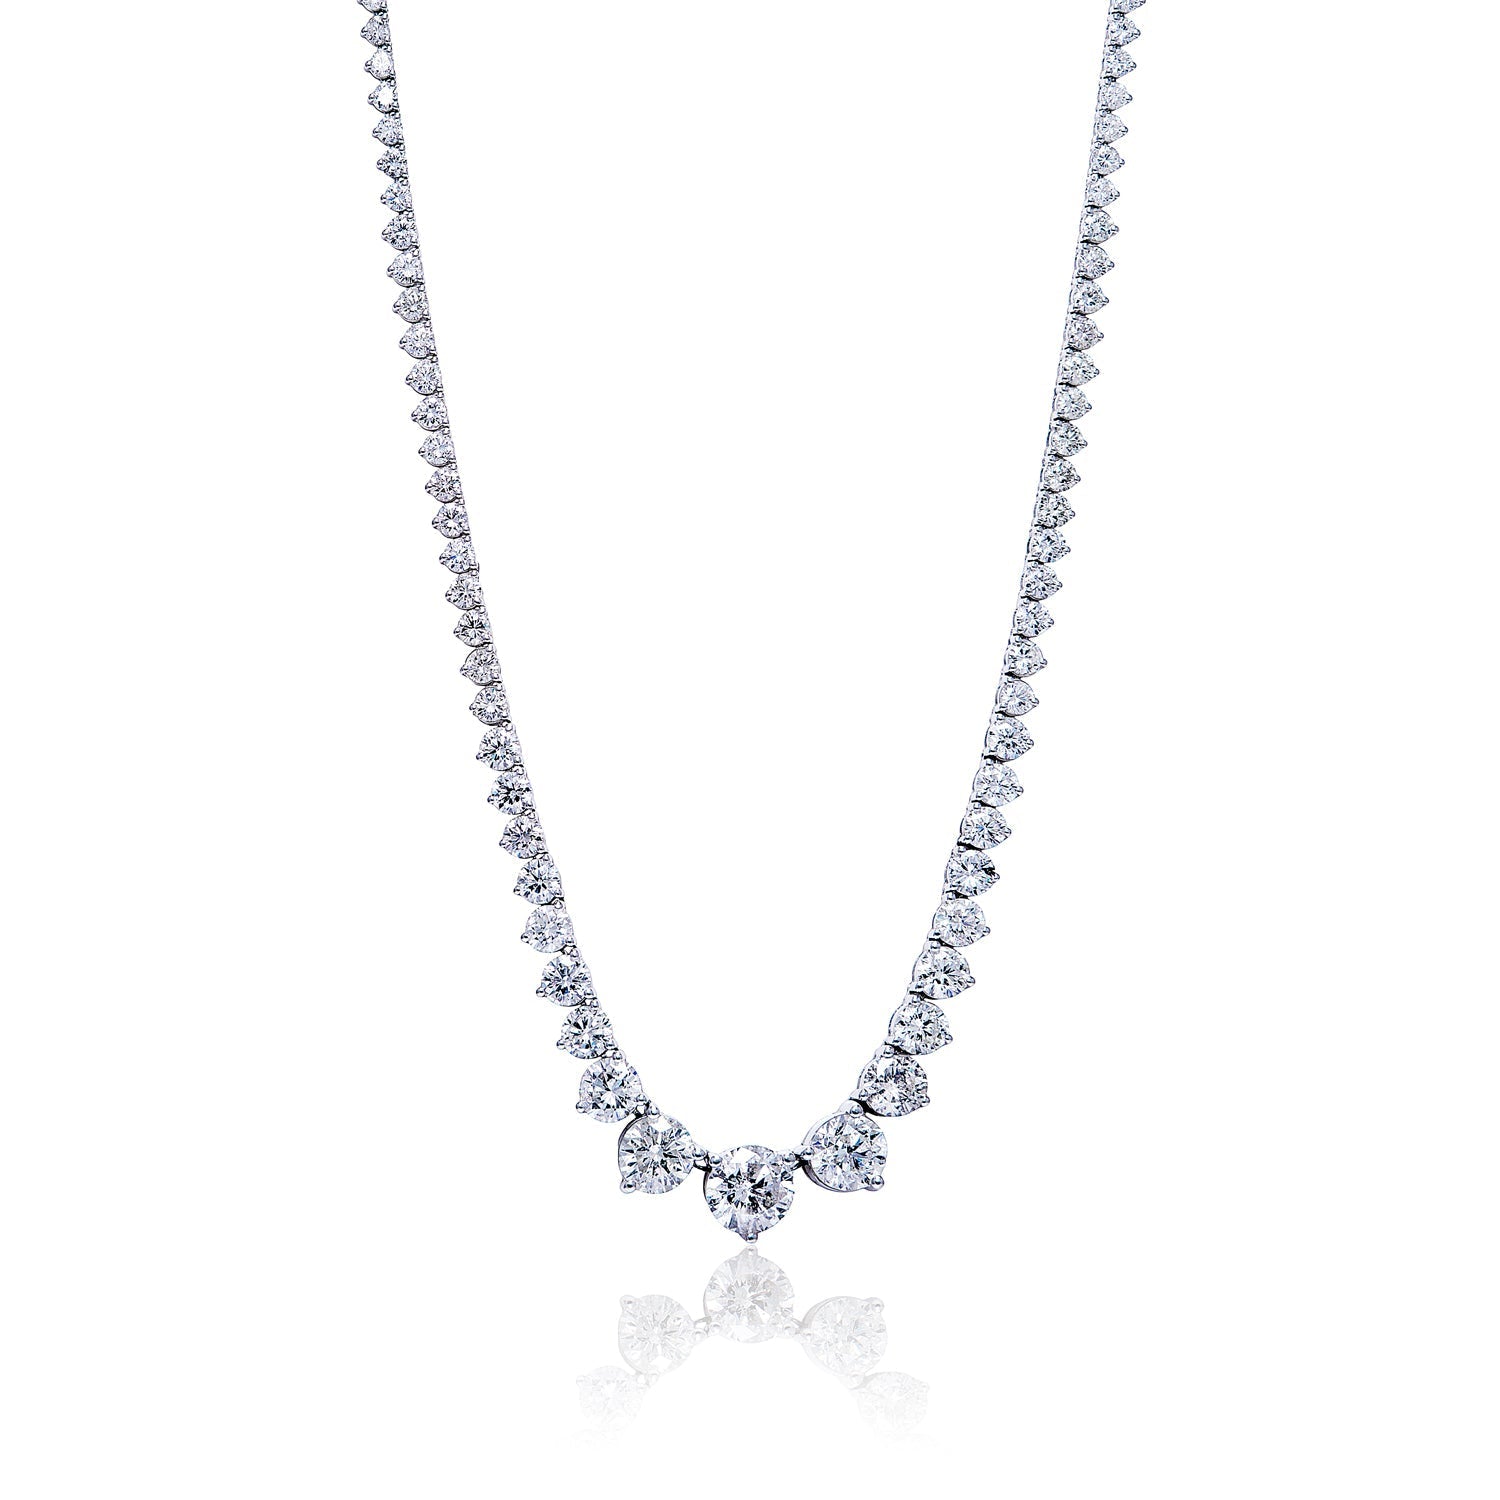 Joelle 26 Carat Round Brilliant Diamond Necklace in 14kt White Gold